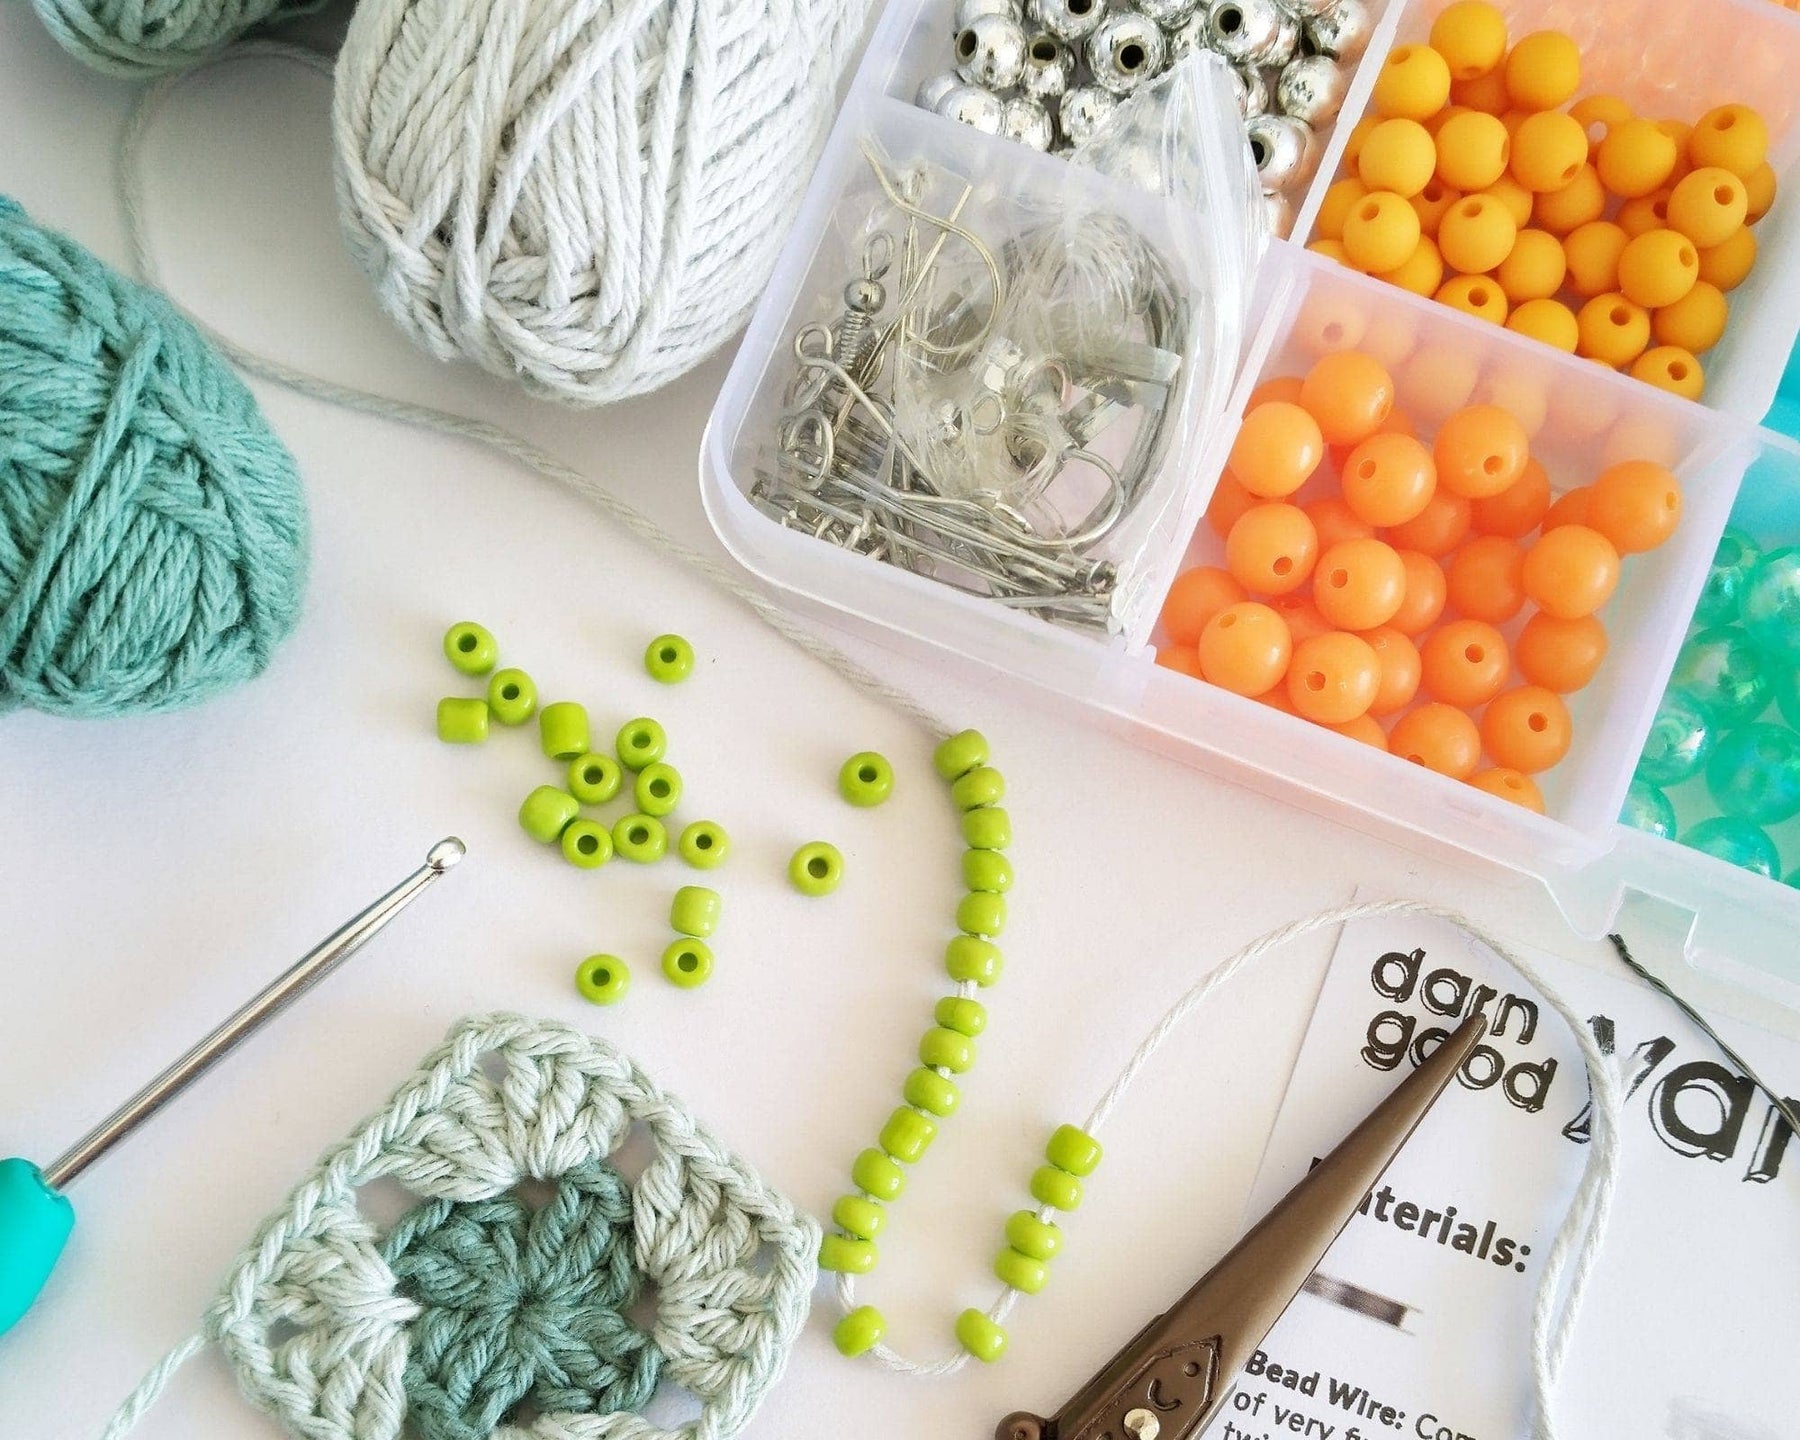 DIY Black White Patchwork Bead Crochet Necklace Kit Jewelry Making Kit Adult  Craft Supply Kit Bead Crochet Pattern Diy Craft Gift 